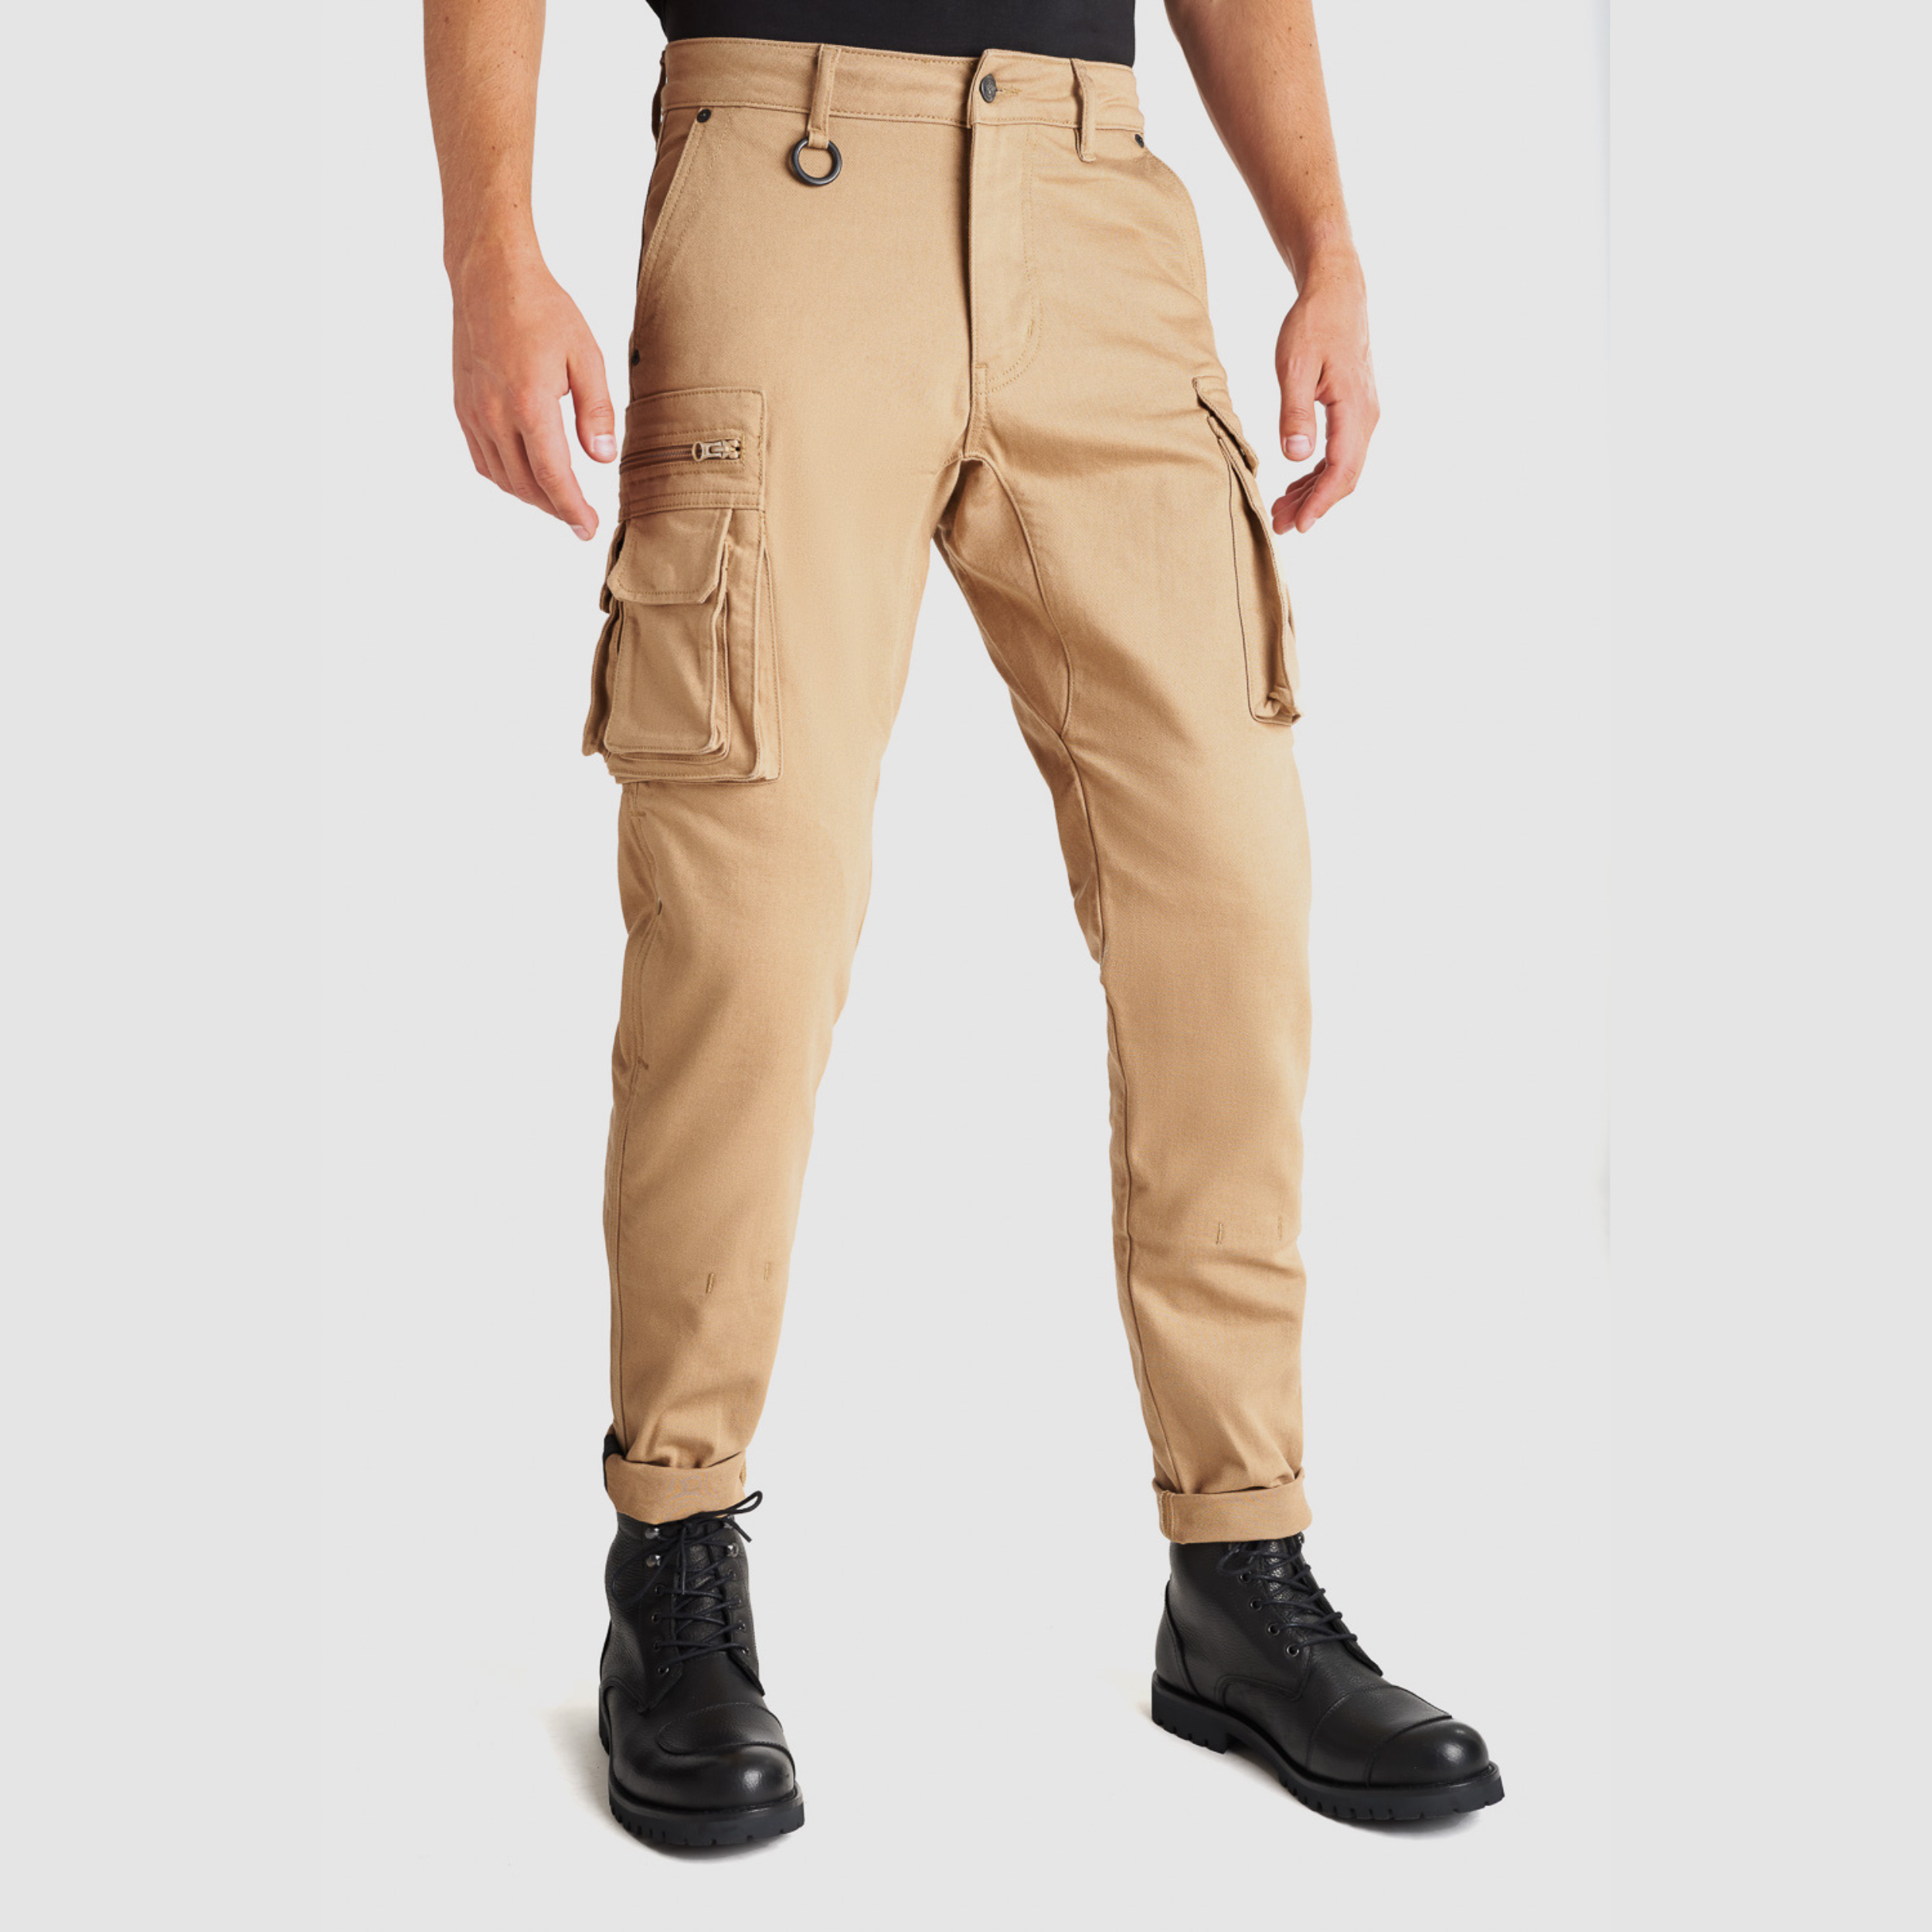 Pando Moto Desert Cargo Jeans, Length 30 - Beige